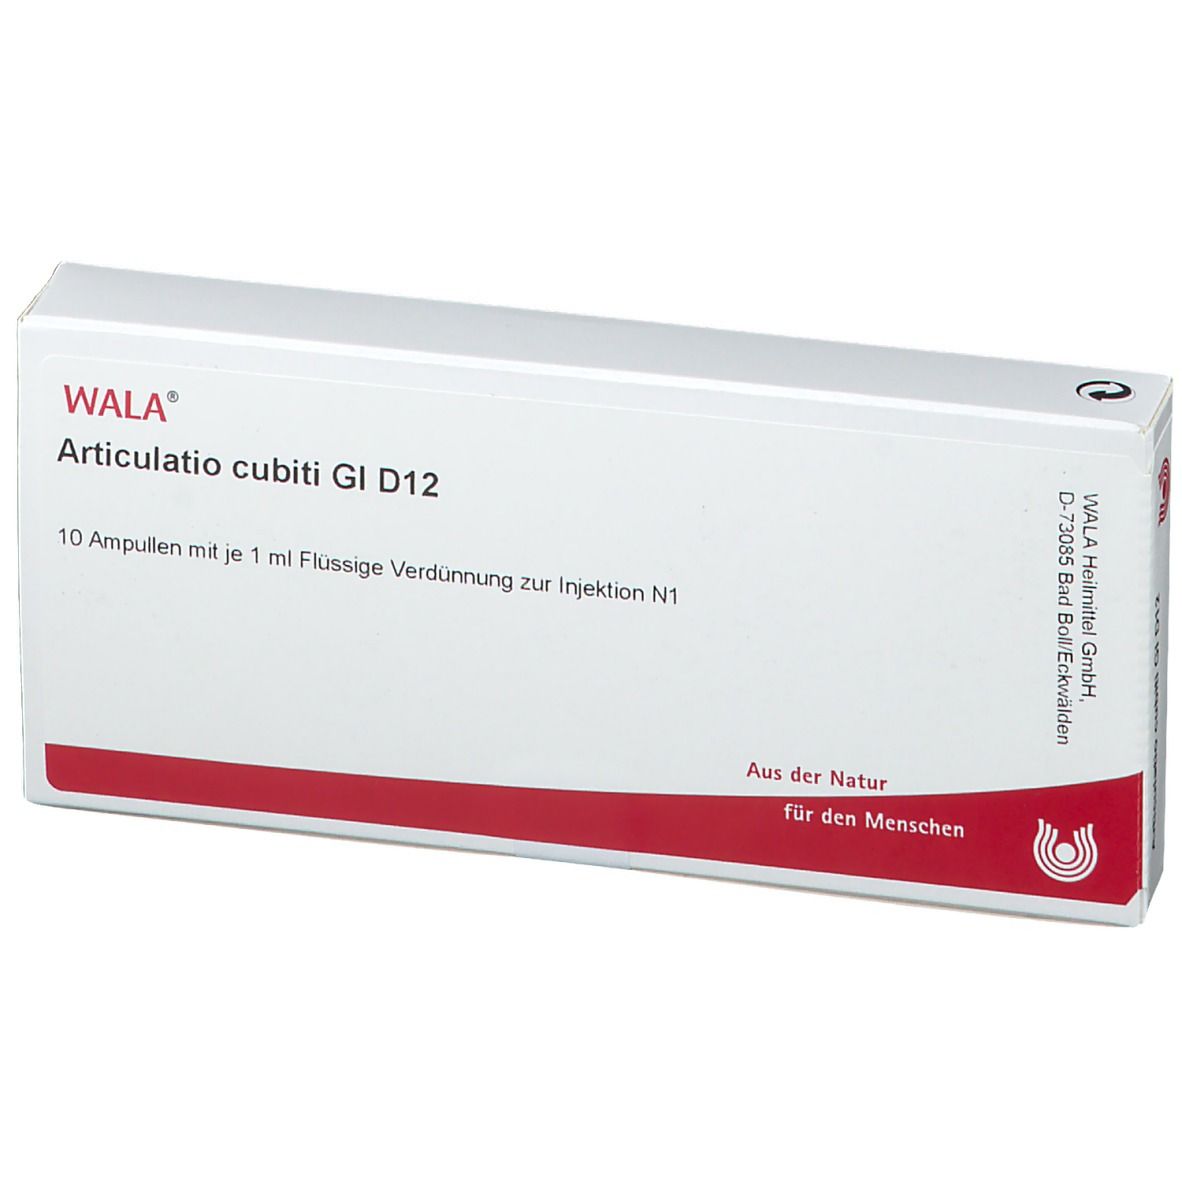 WALA® Articulatio cubiti Gl D 12